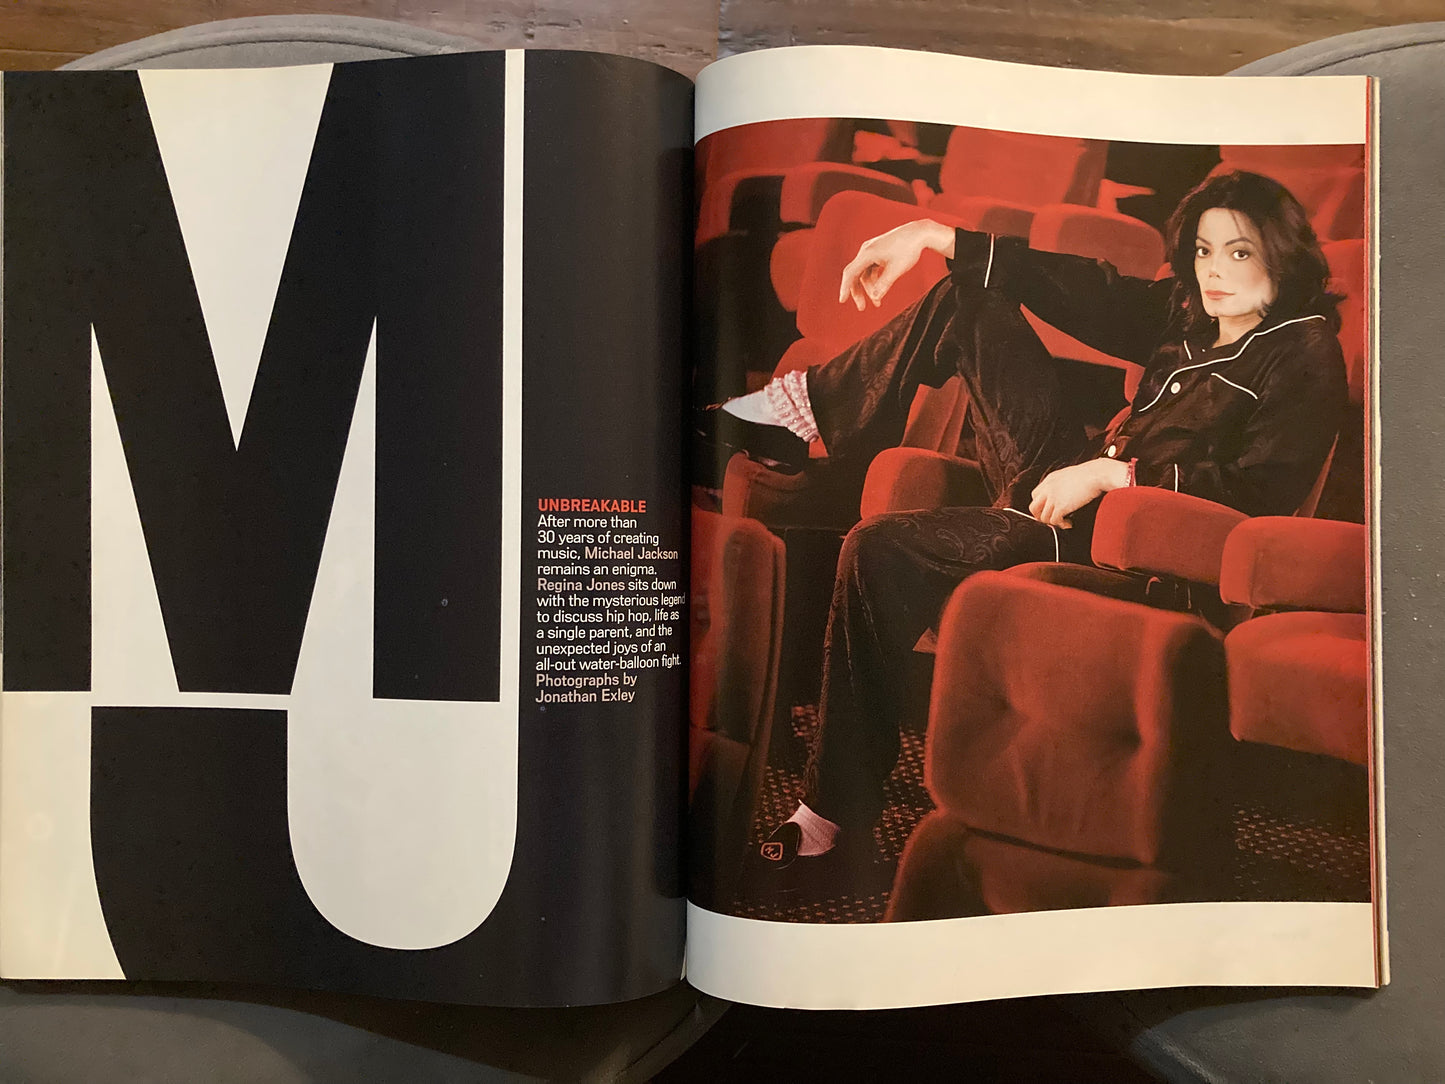 Vibe Magazine March 2002 Michael Jackson - MoSneaks Shop Online